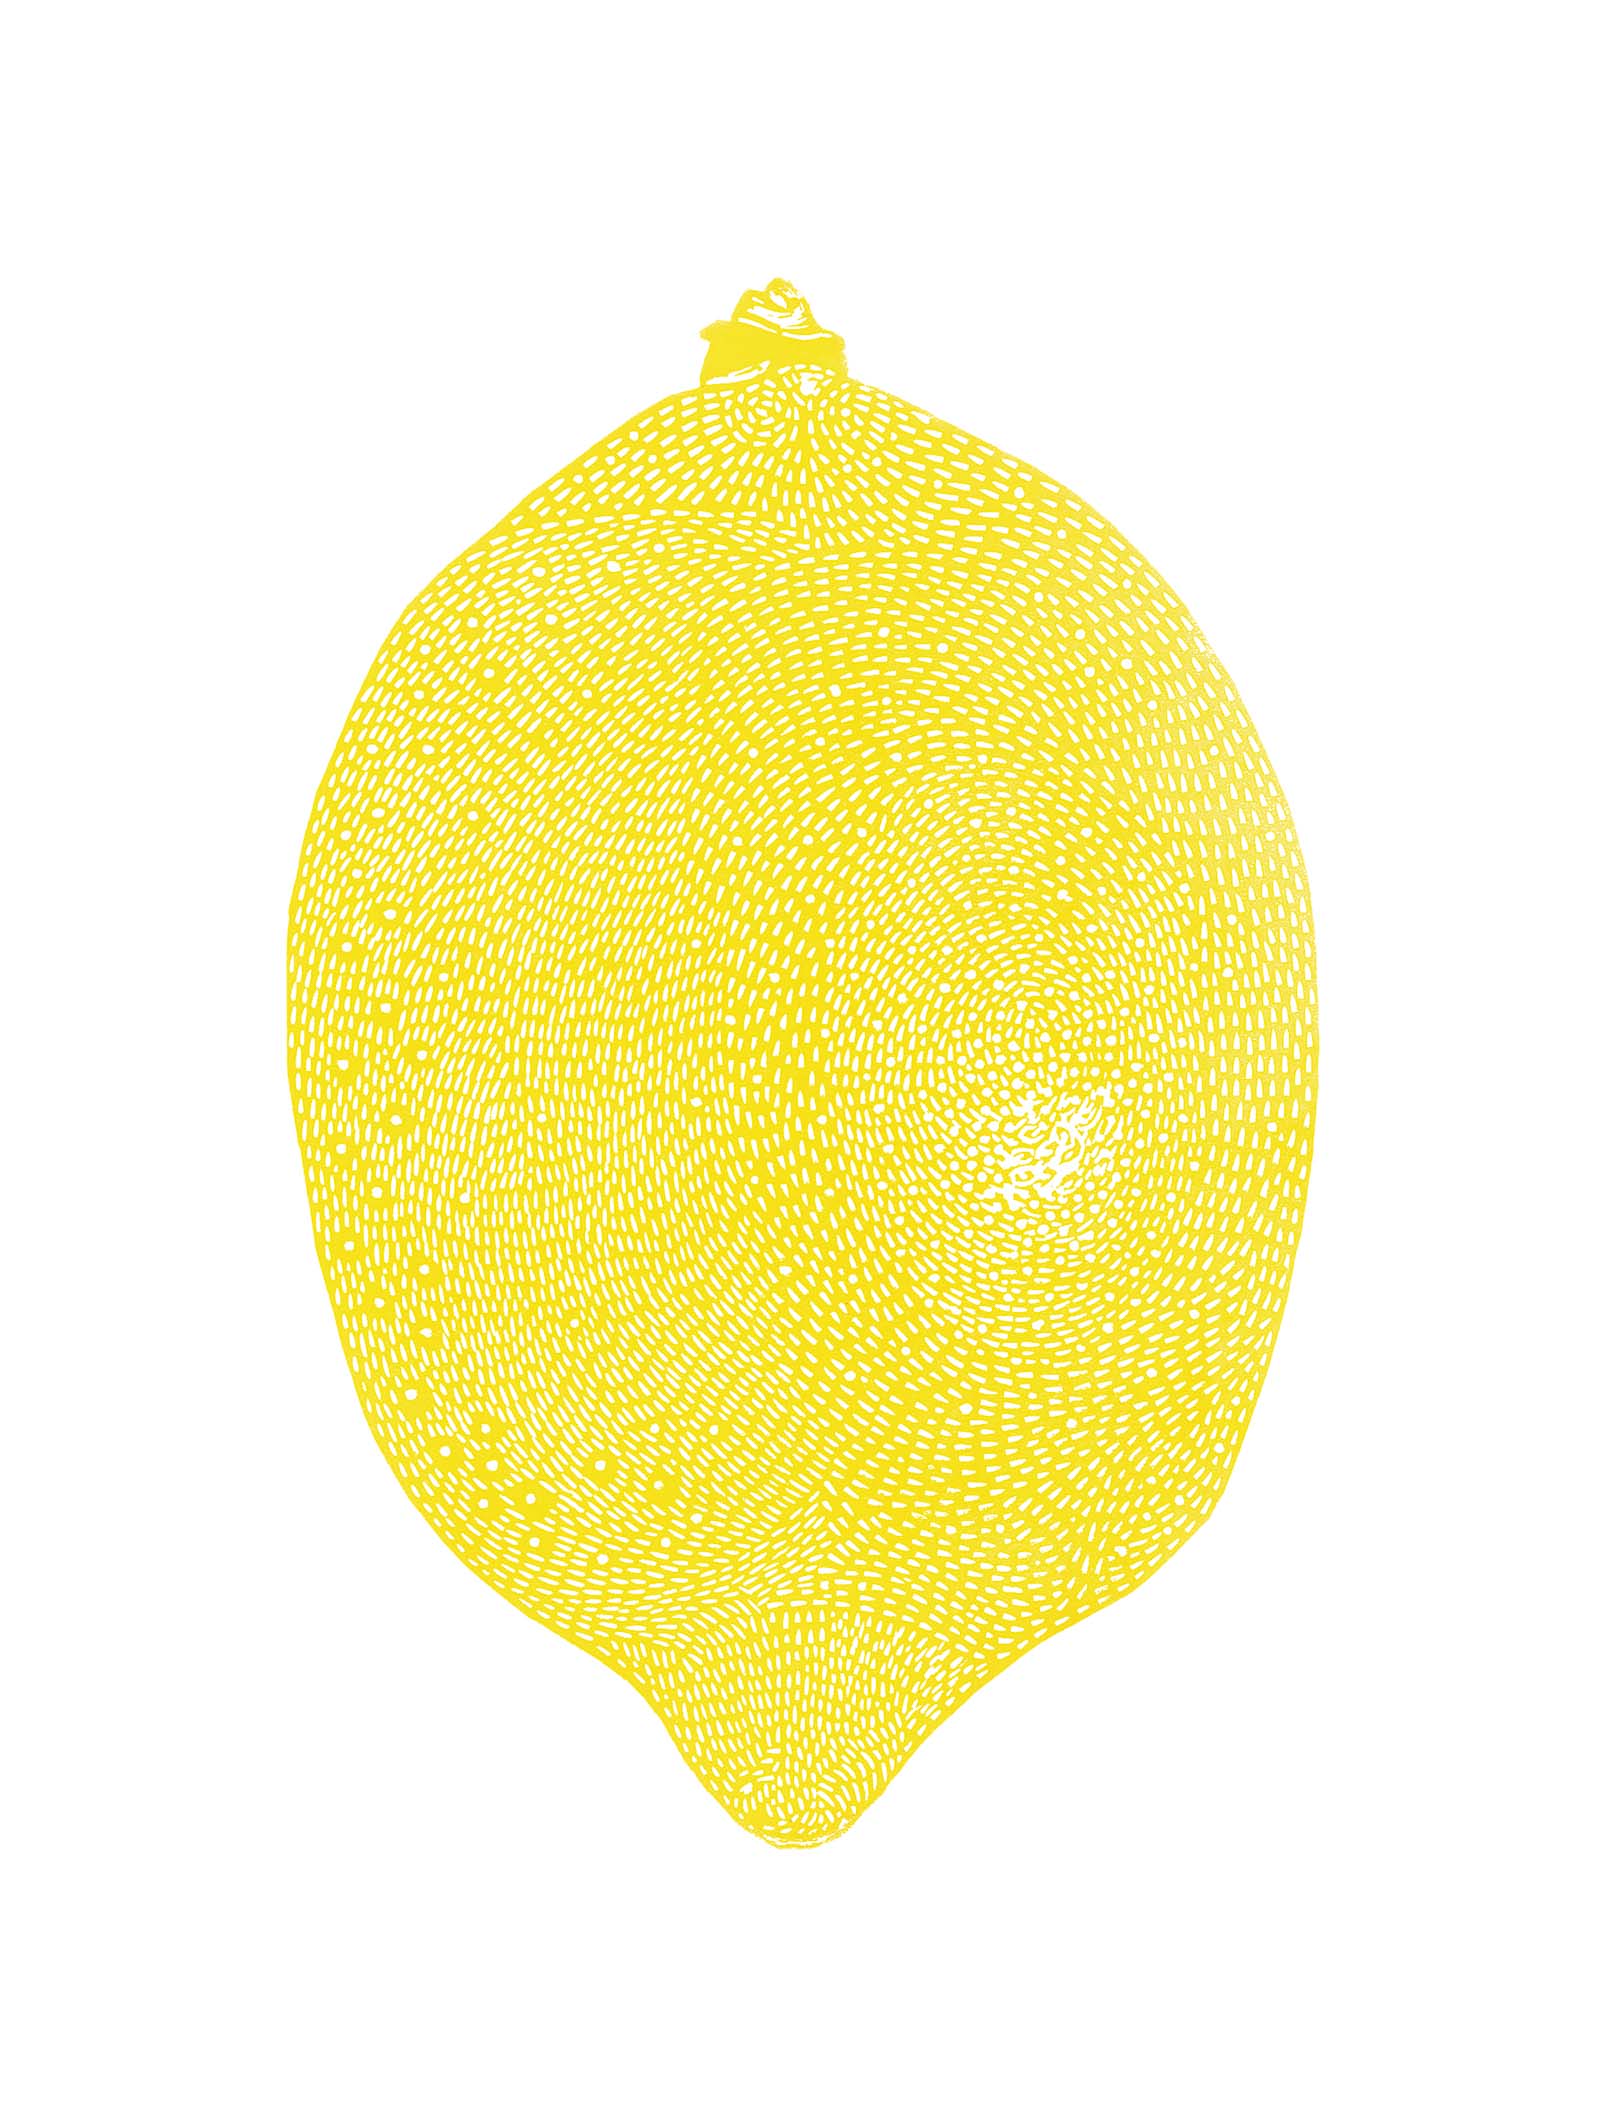 Lemon by Monika Petersen